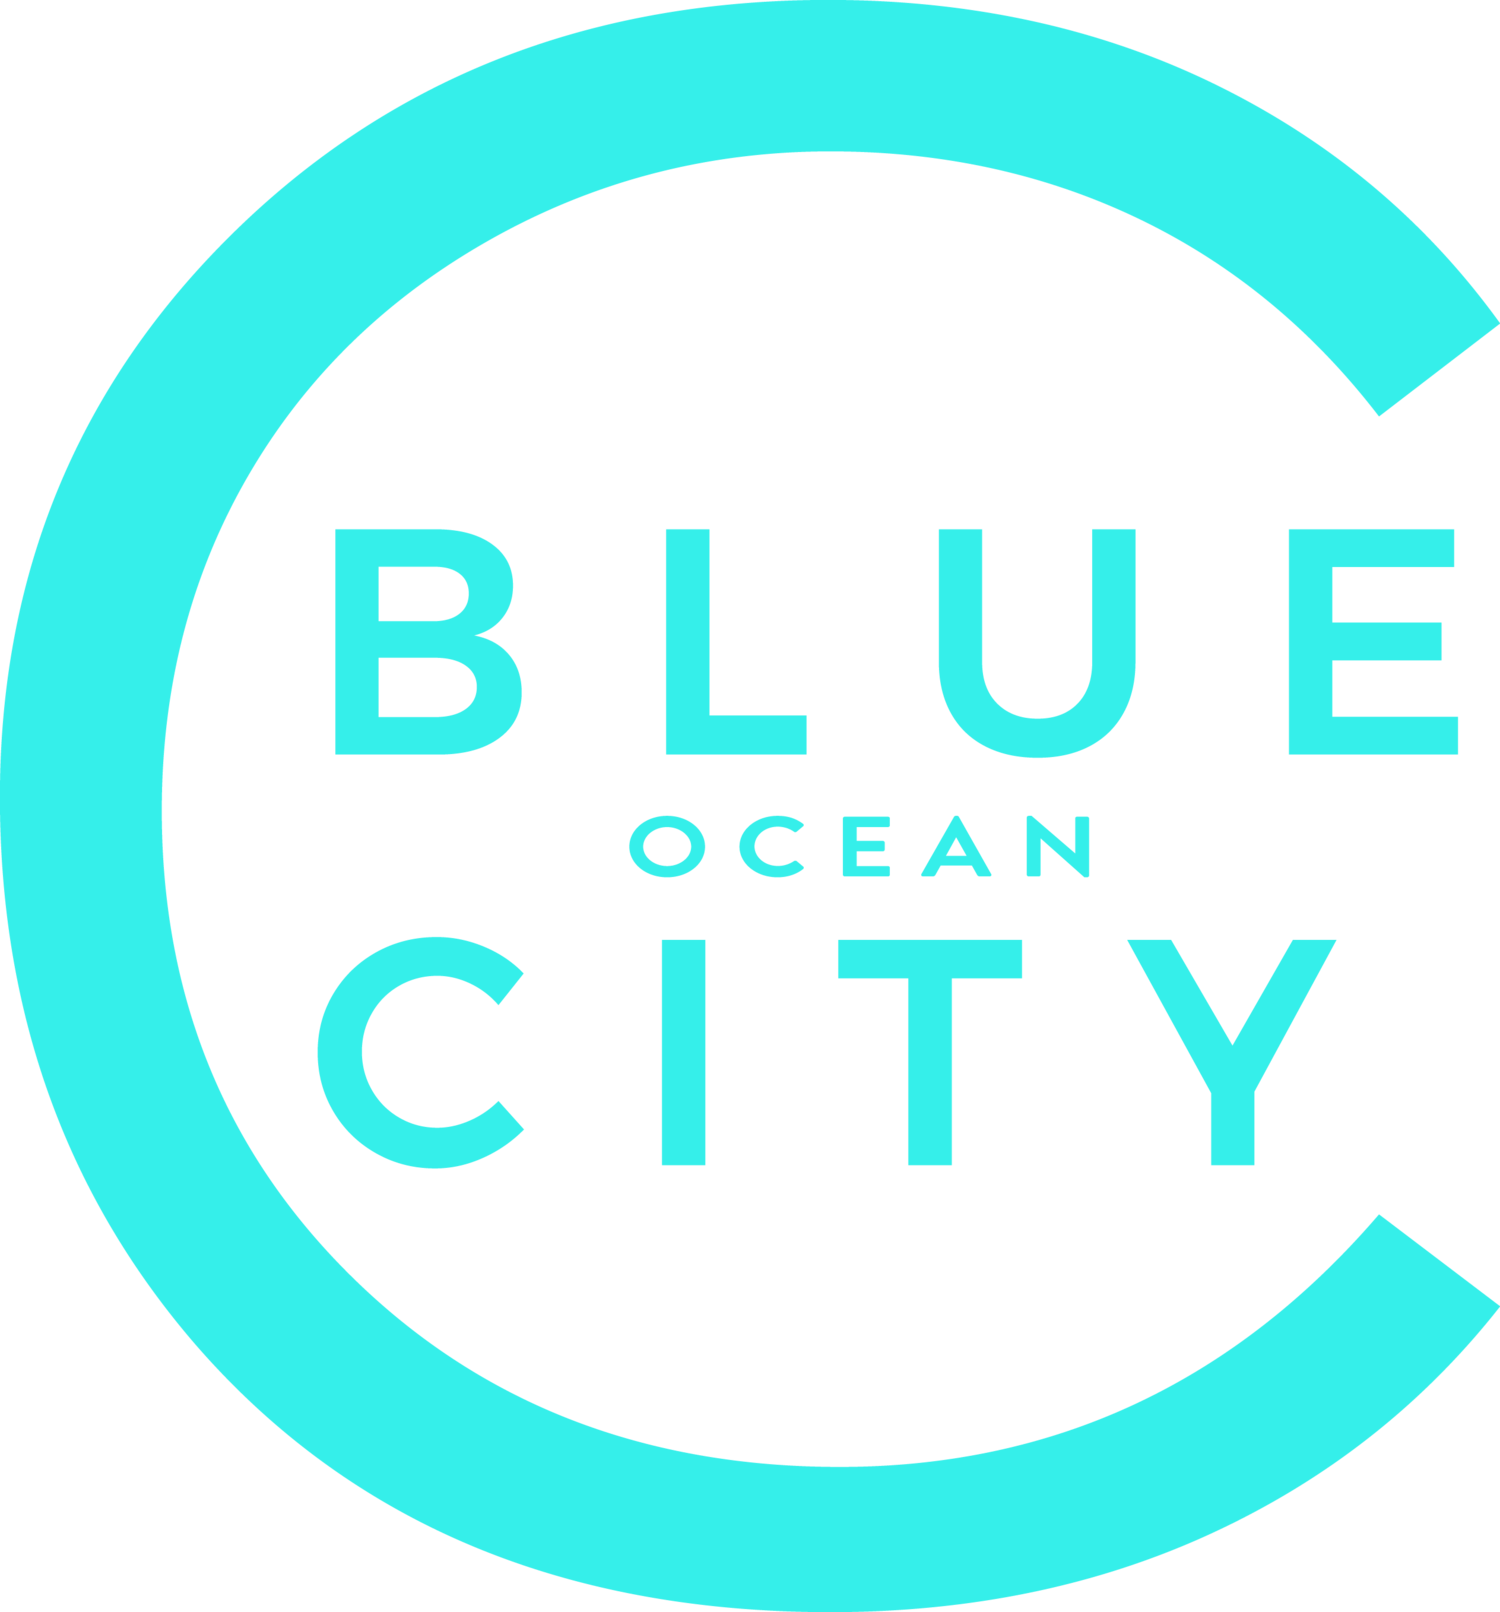 BLUE OCEAN CITY